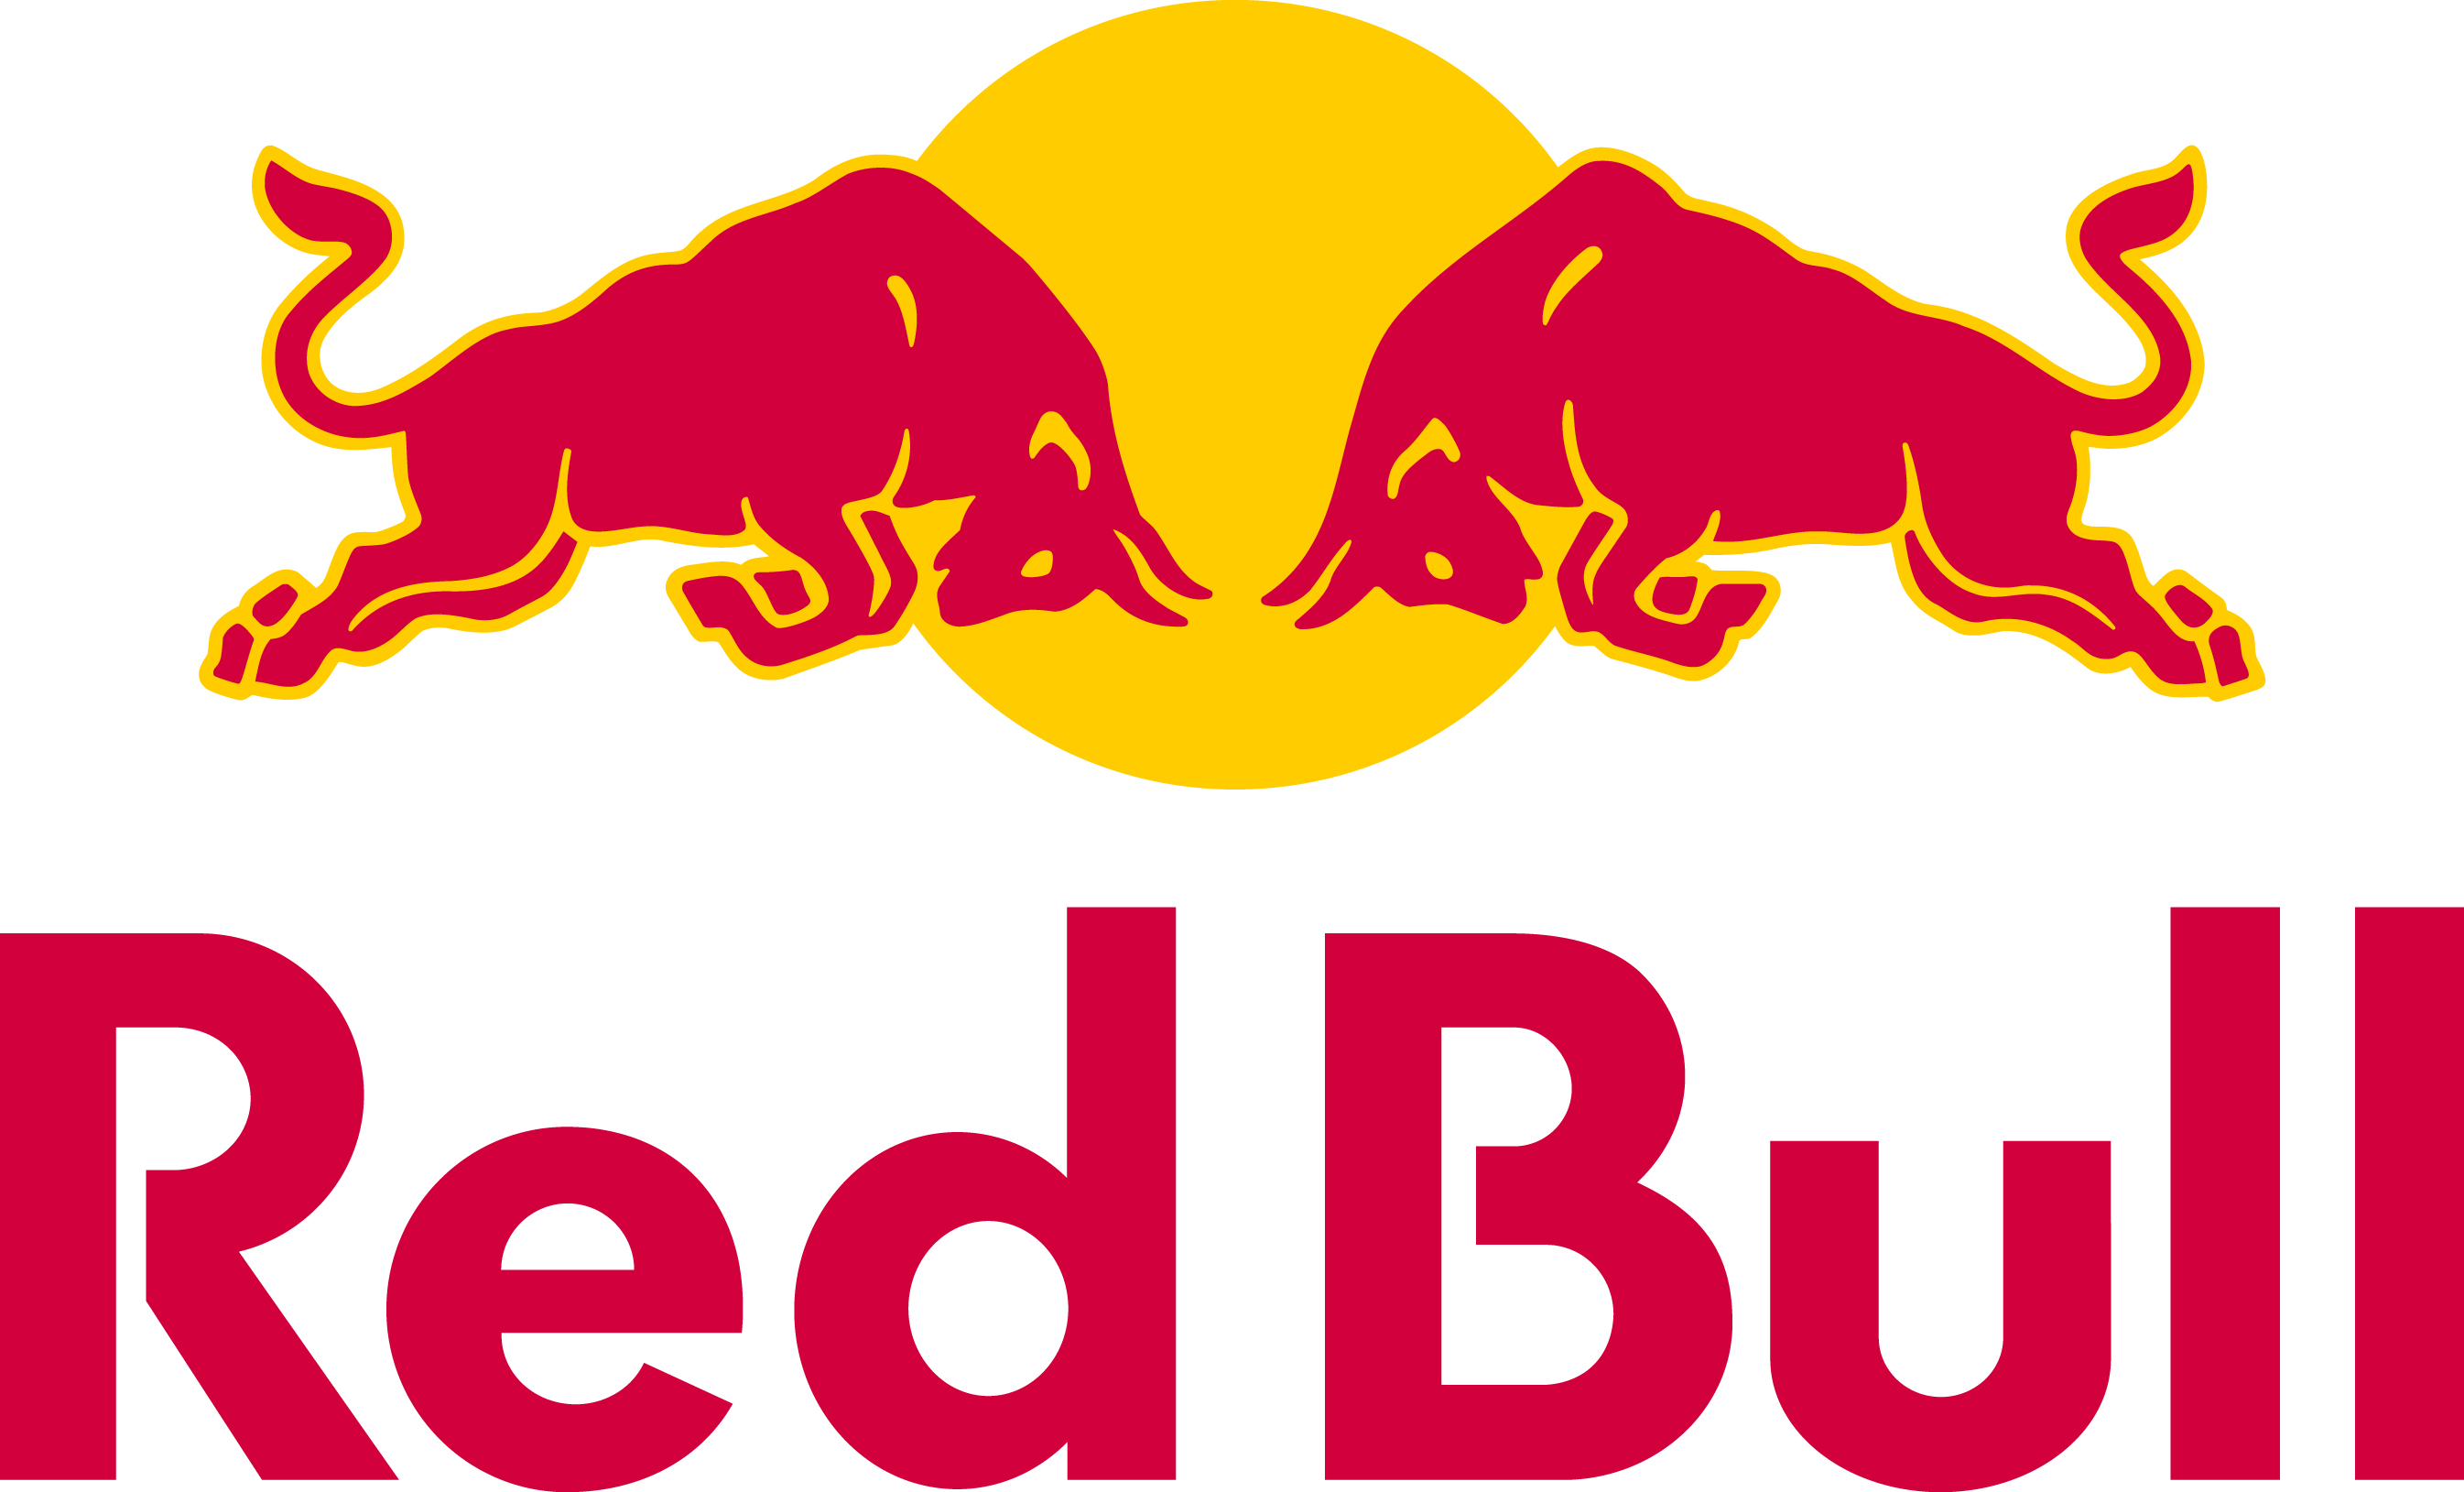 Design jobs at Red Bull